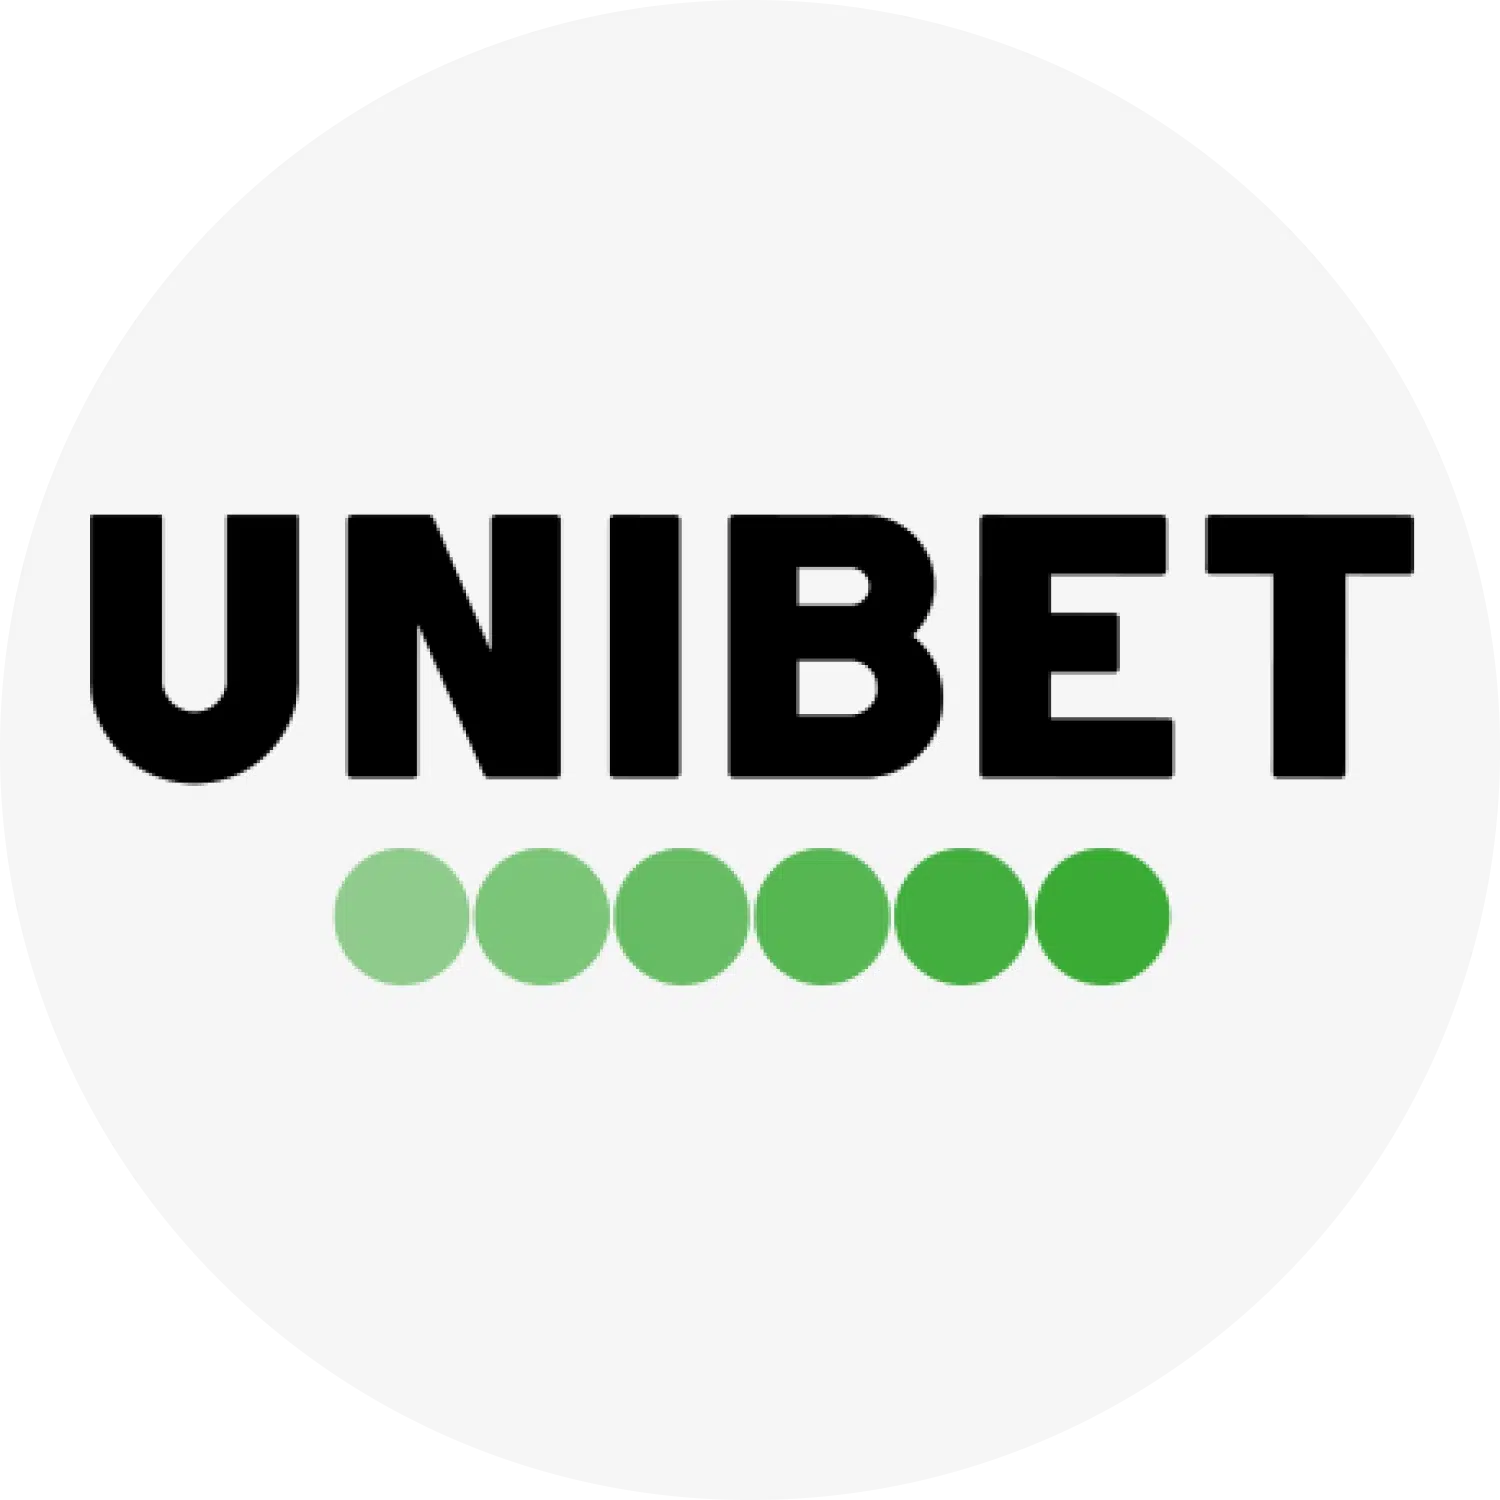 Unibet logo rotund 1500x1500 gri